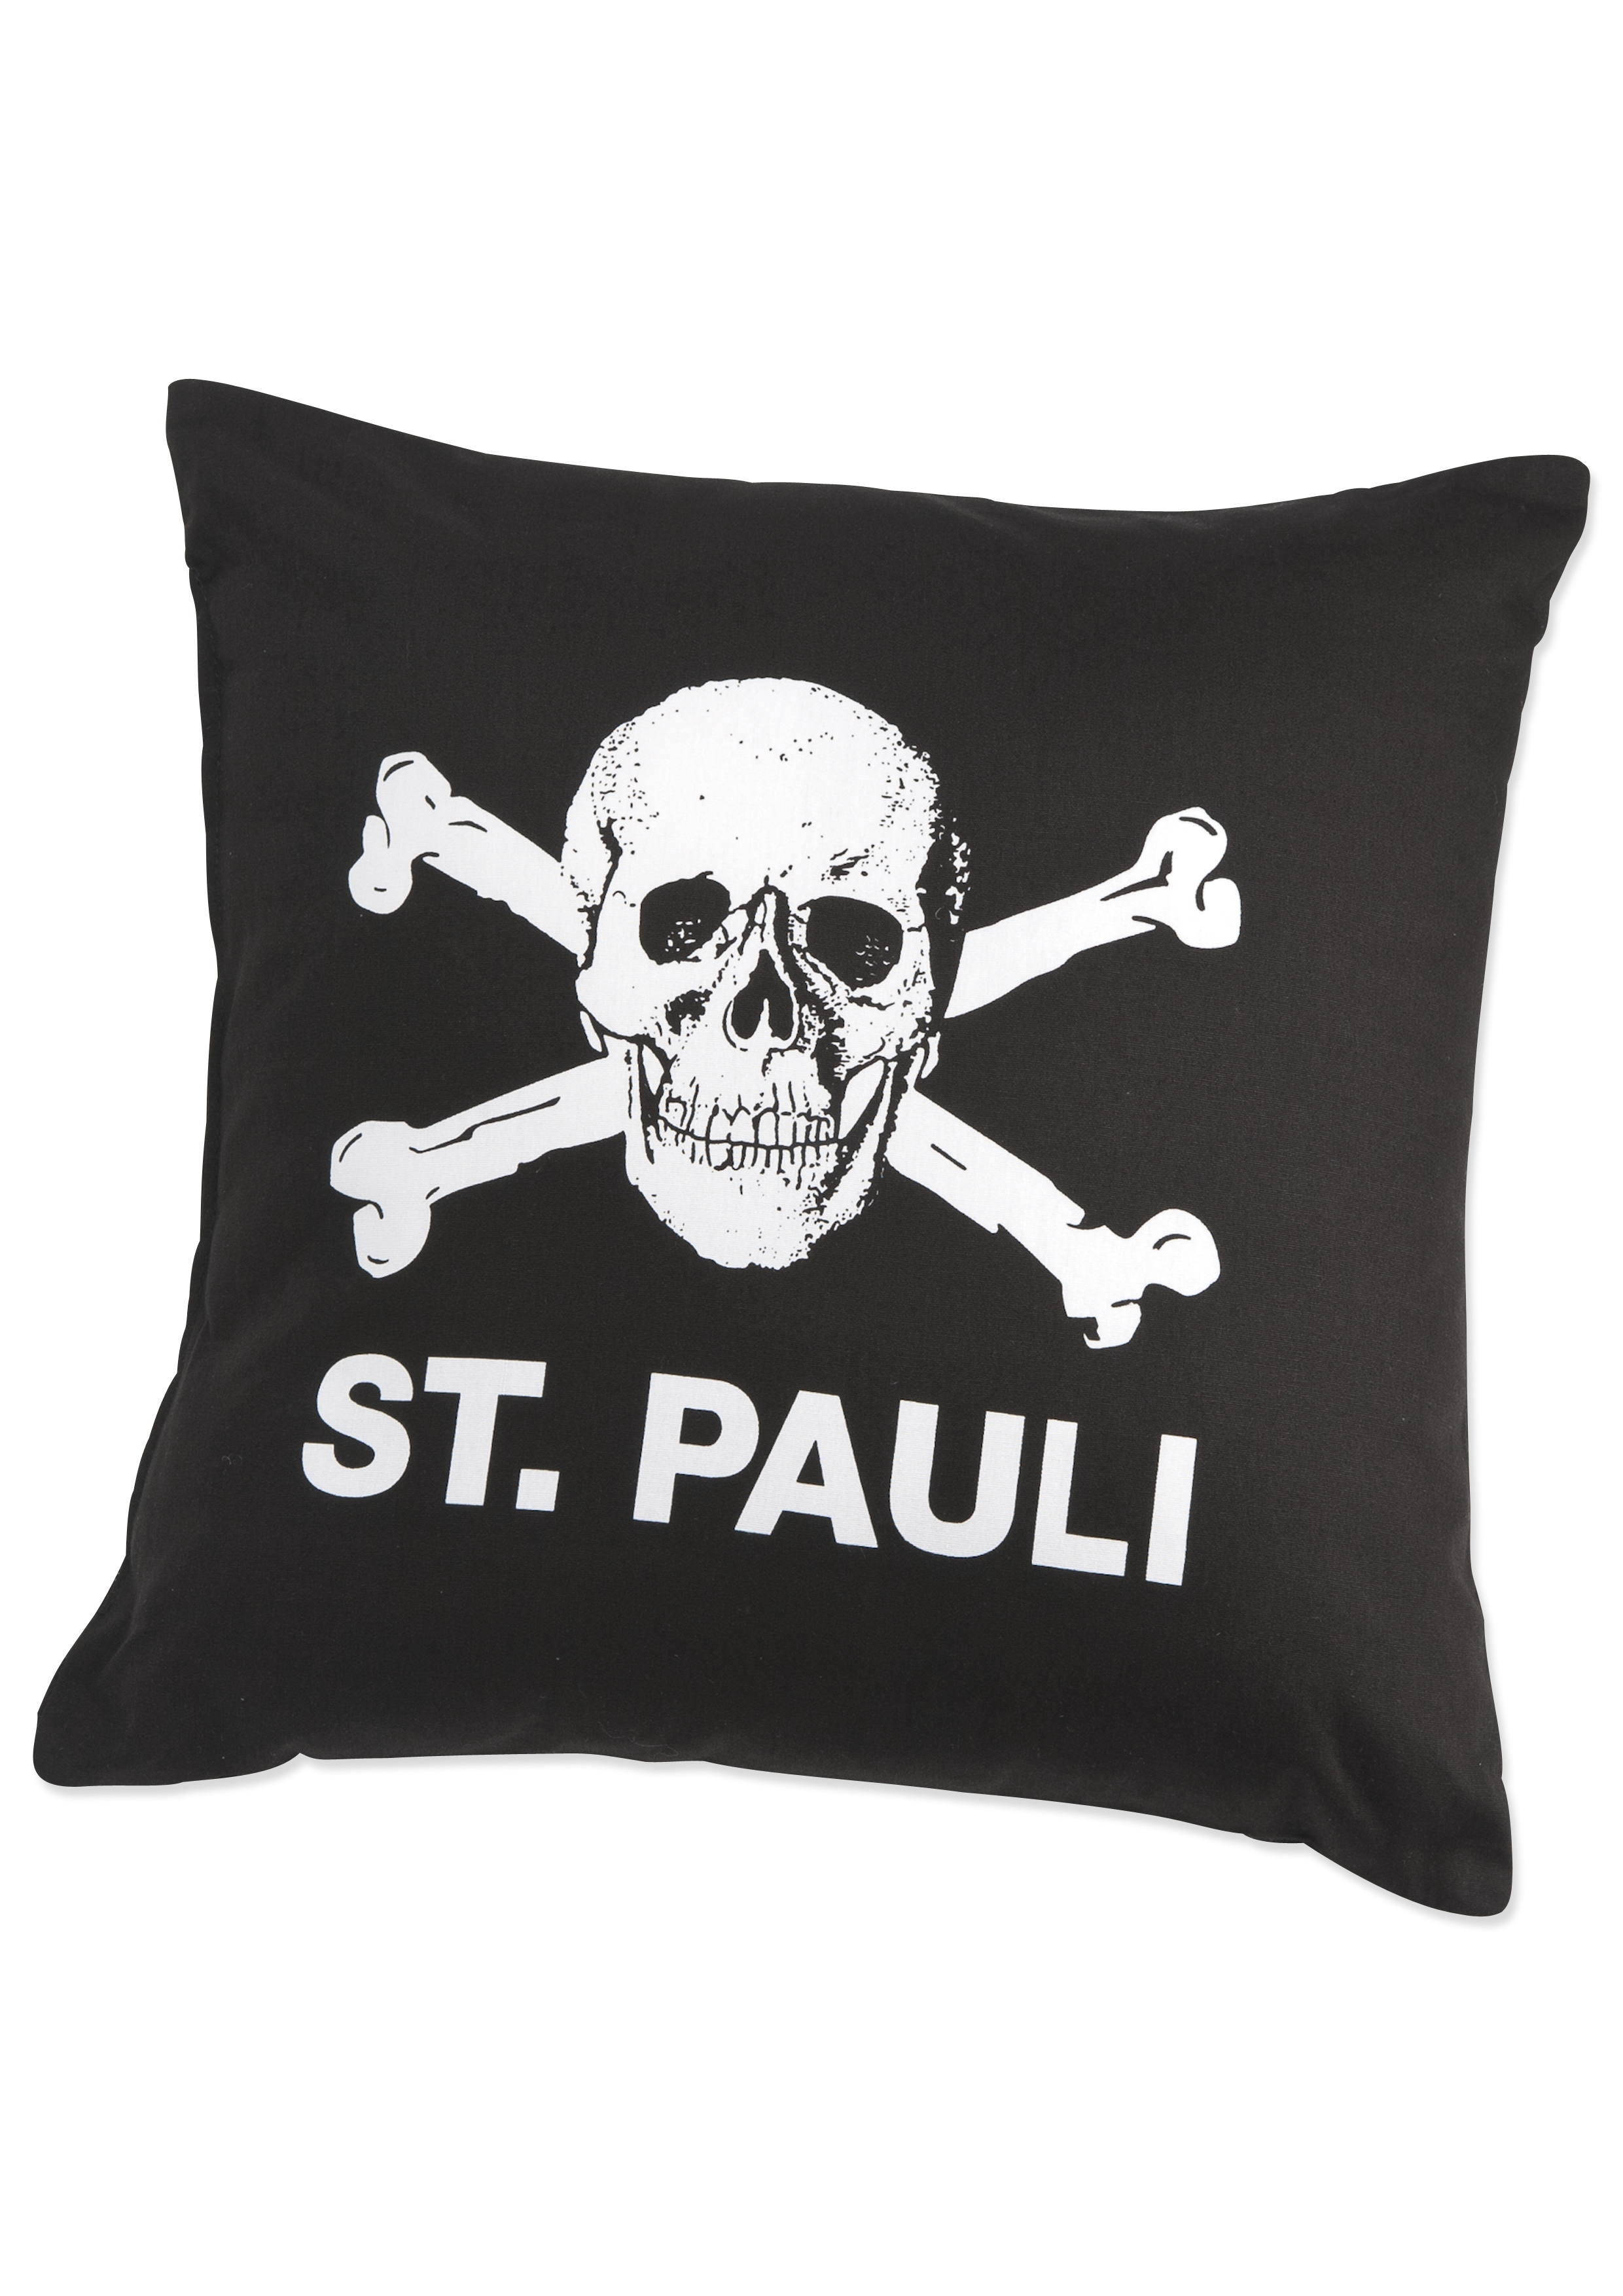 Skull and crossbones cushion